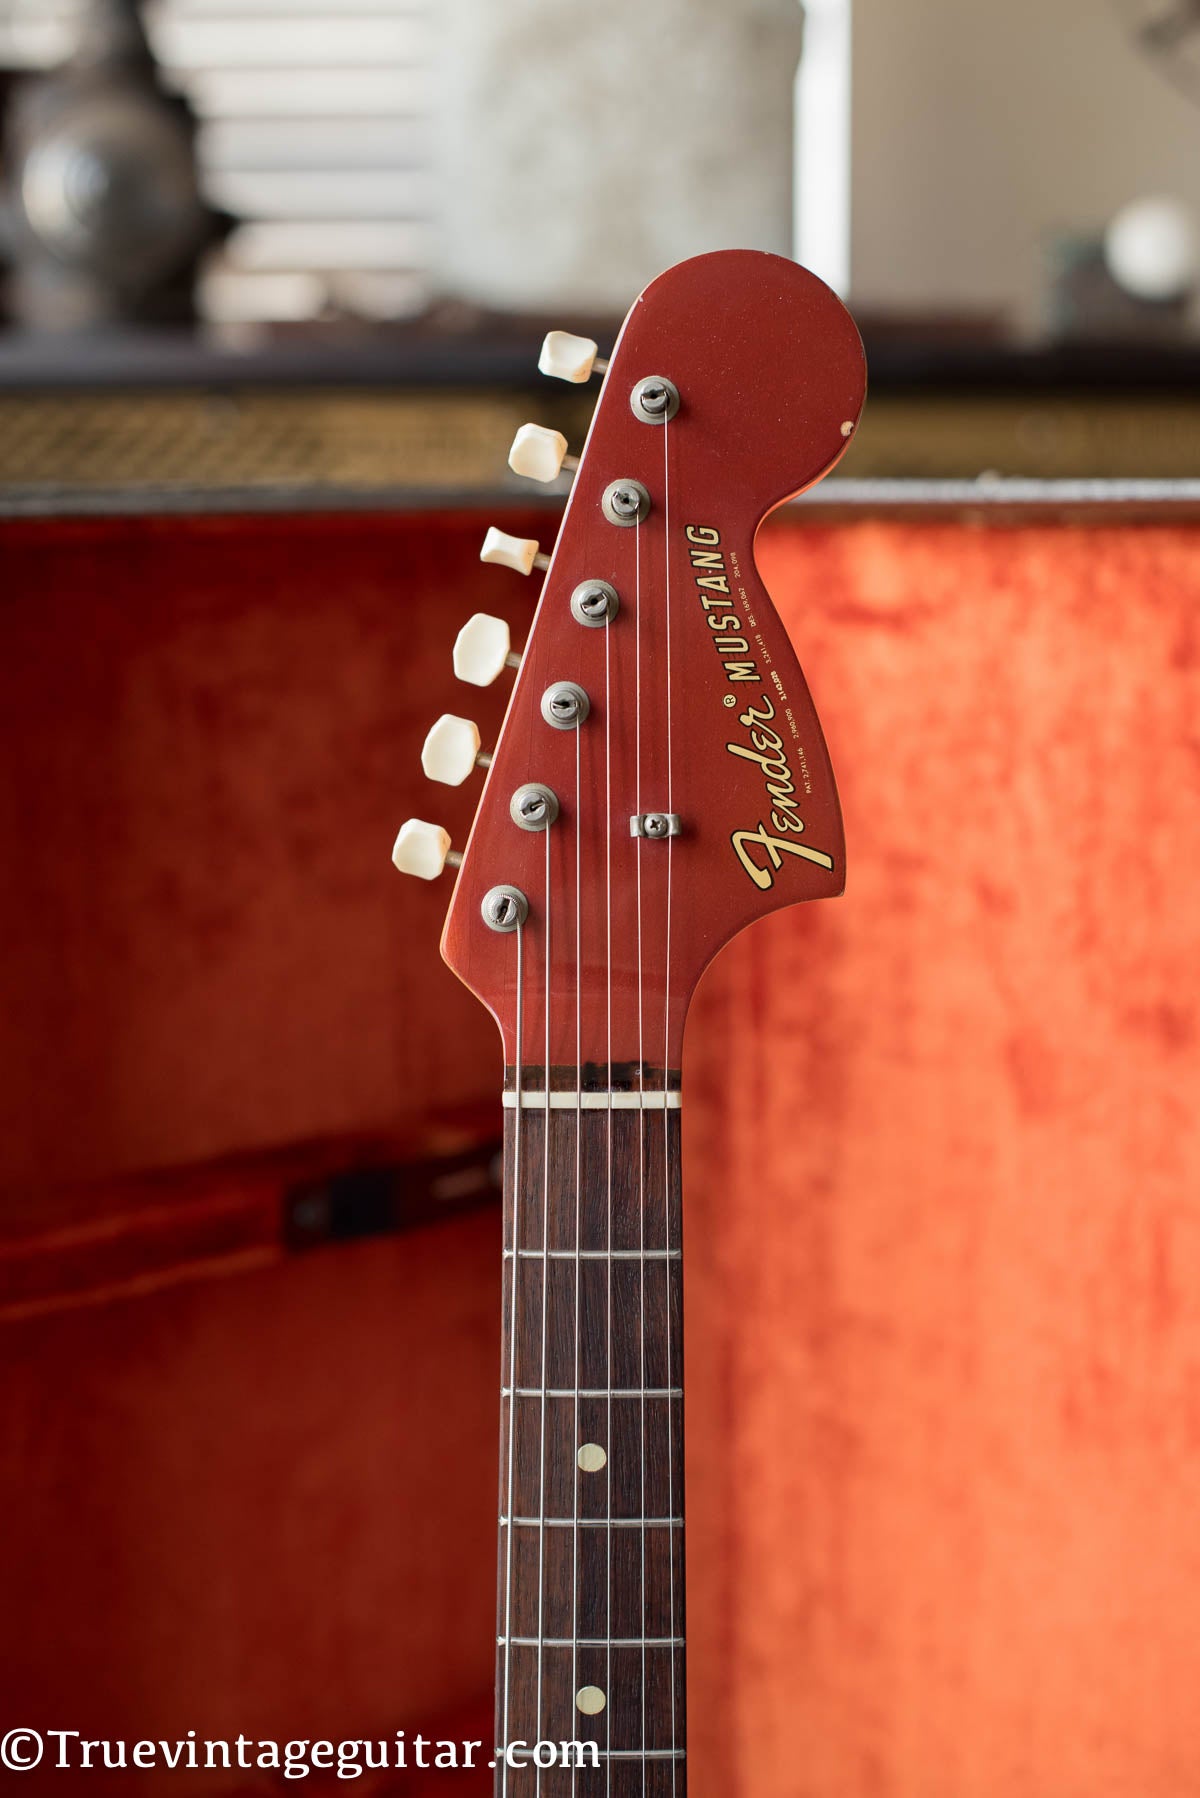 Matching headstock, Vintage Fender Mustang guitar